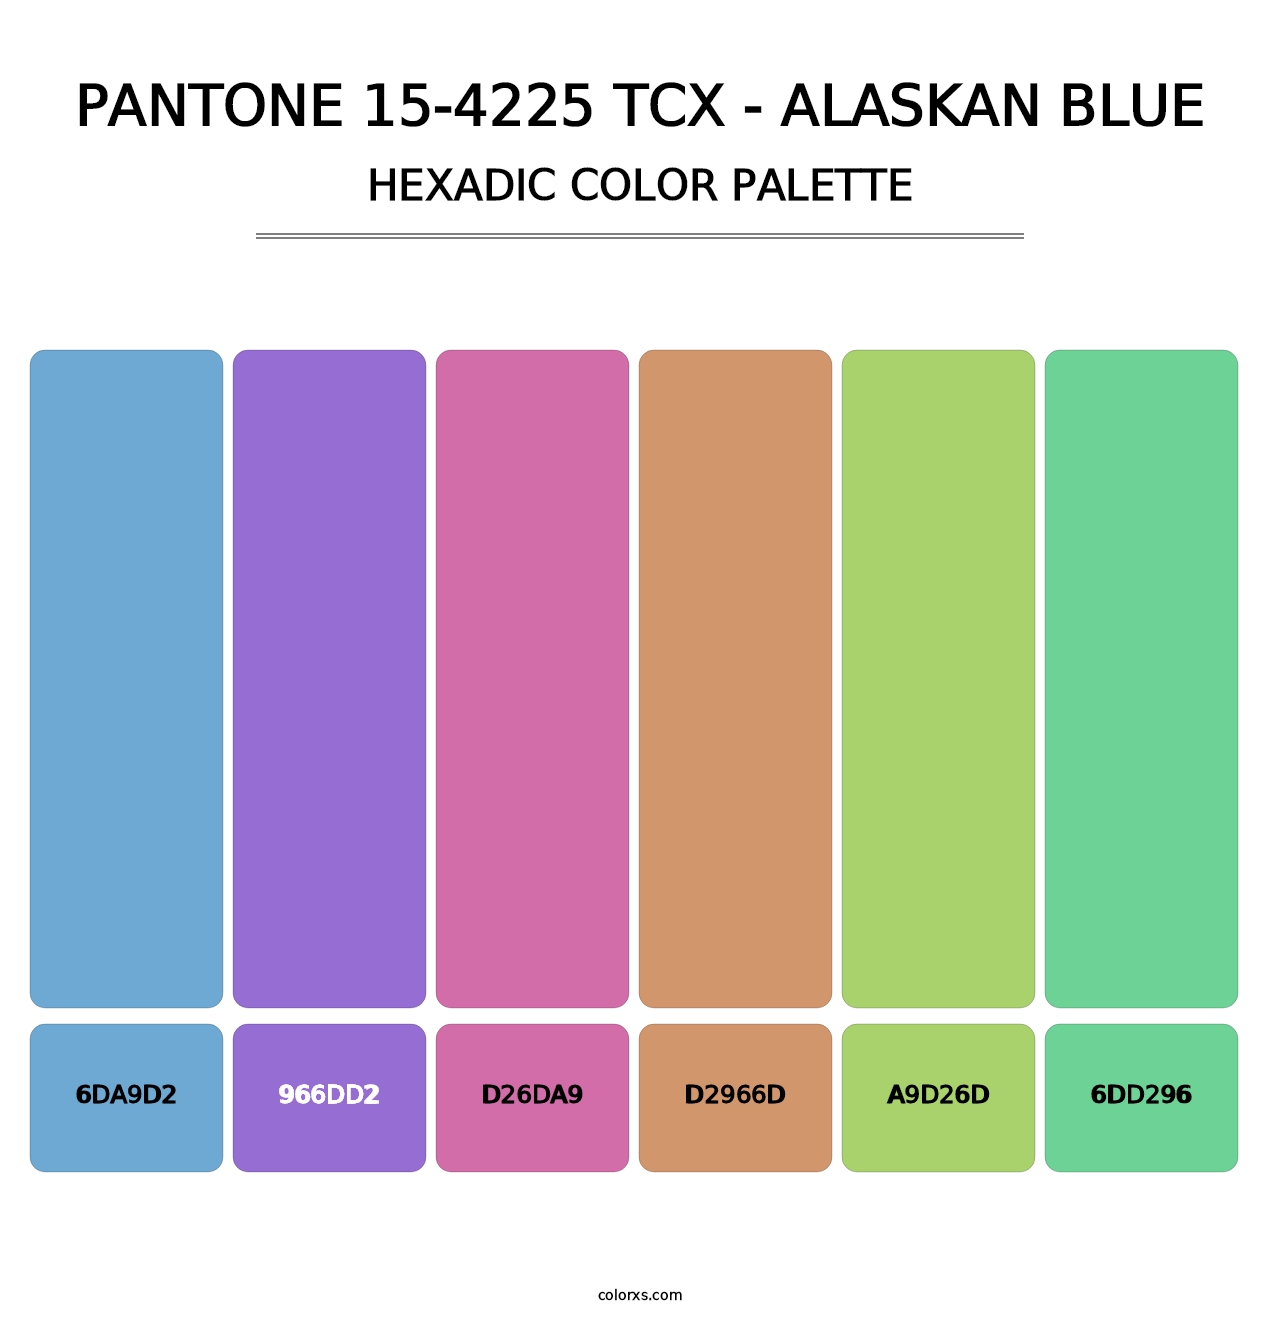 PANTONE 15-4225 TCX - Alaskan Blue - Hexadic Color Palette